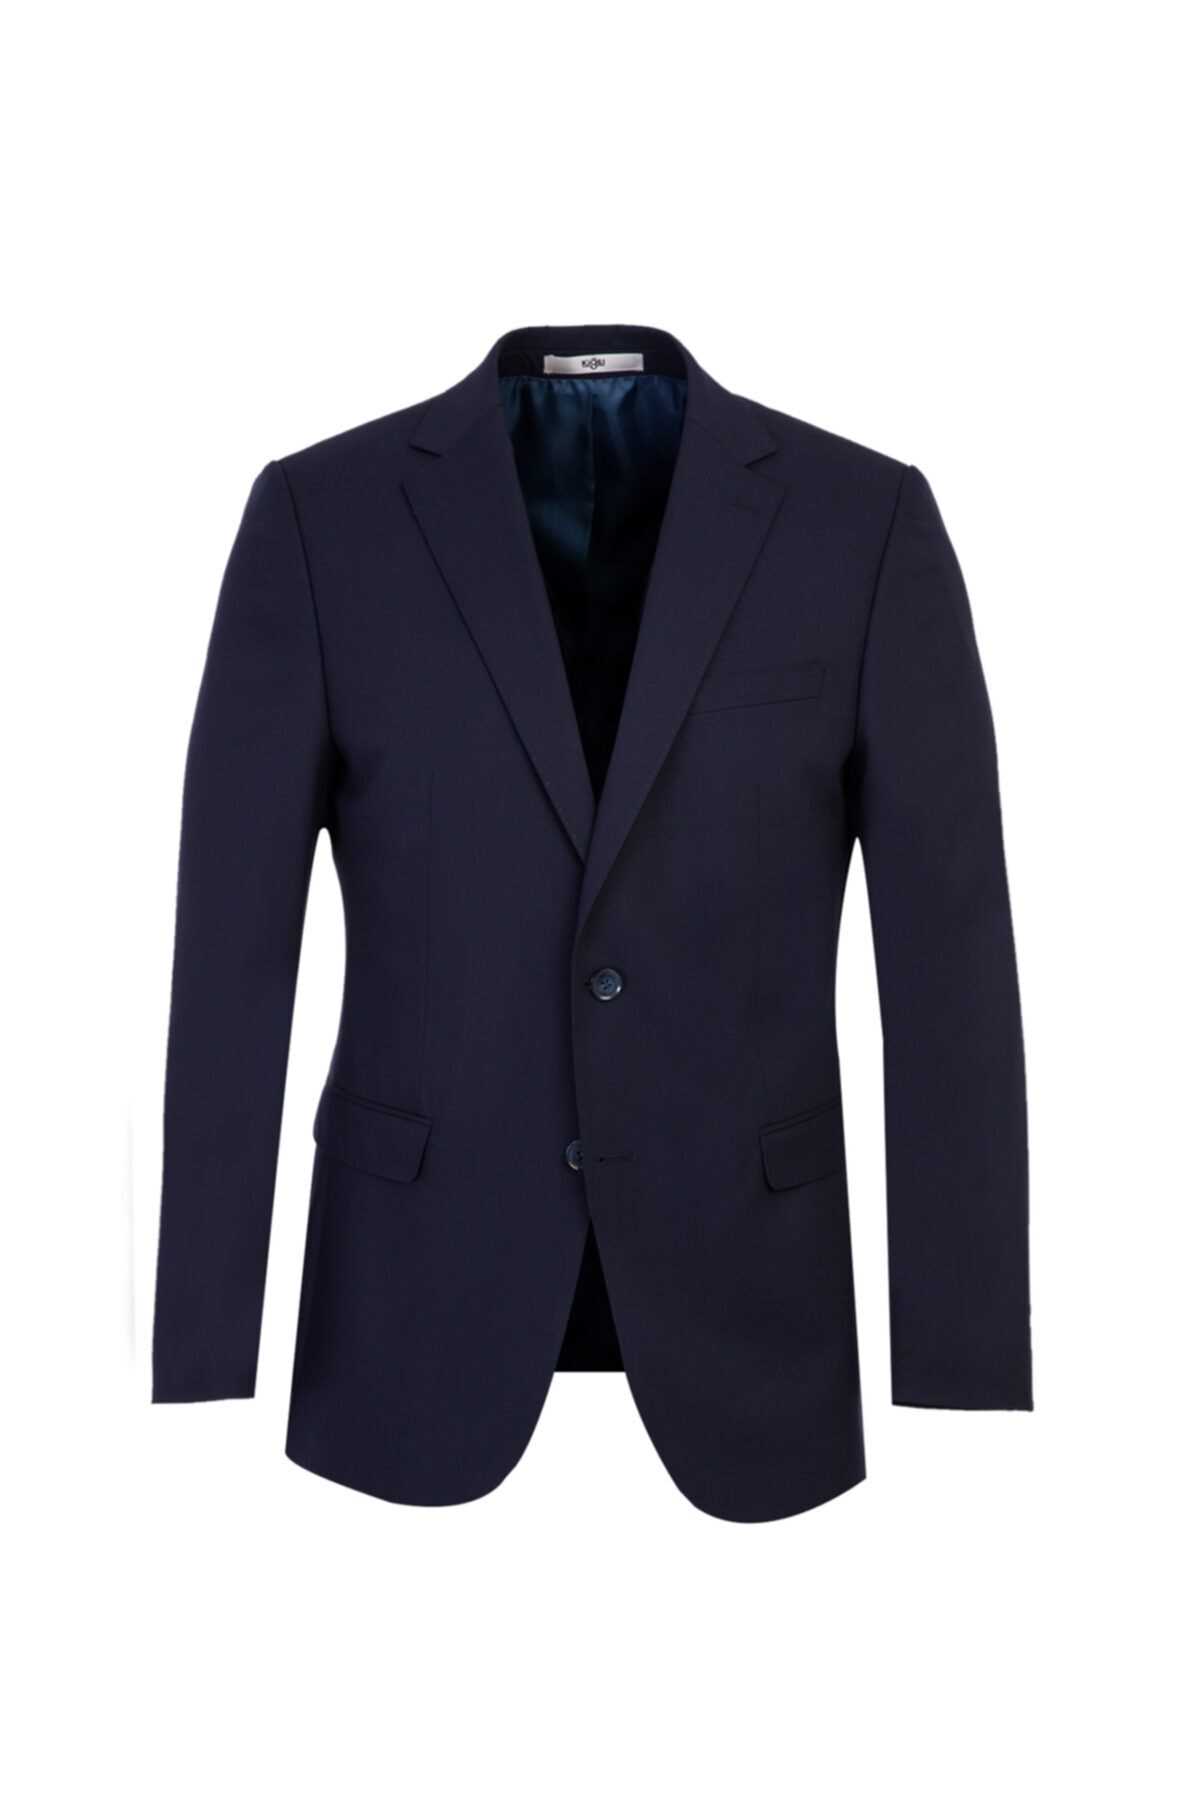 فروش پستی ست کت شلوار مردانه برند Kiğılı رنگ لاجوردی کد ty84849557